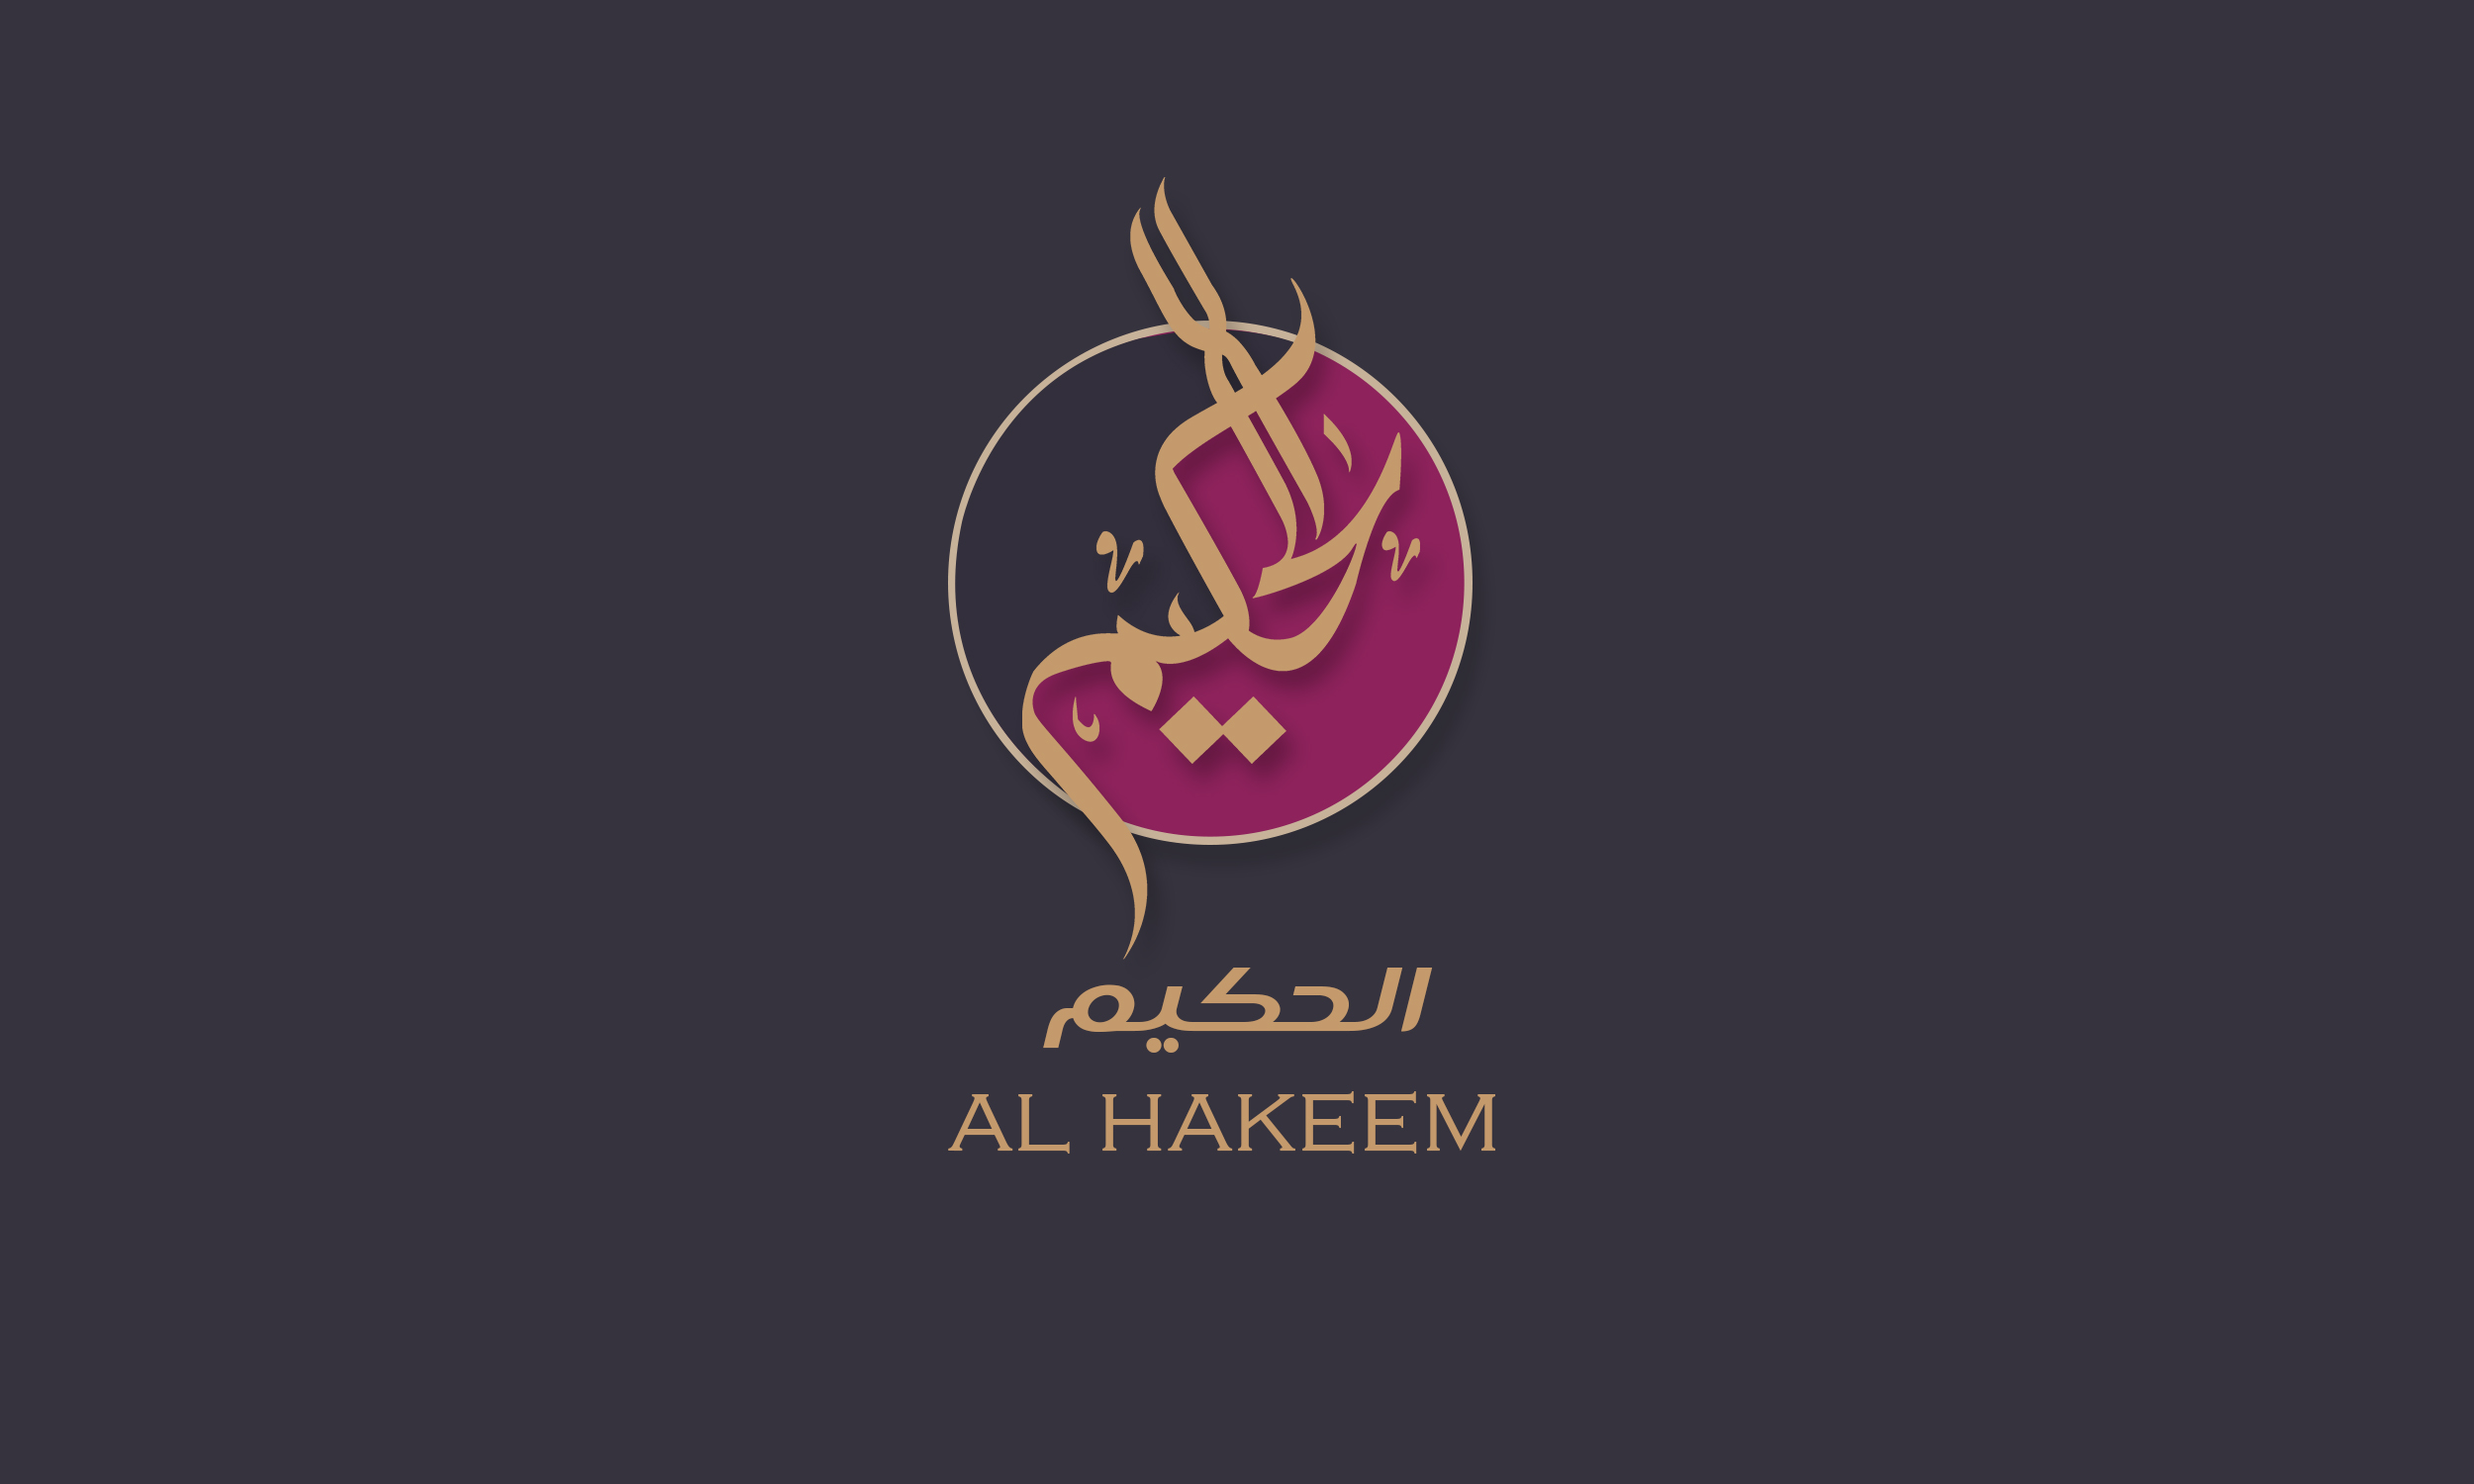 Al Hakeem islamic Arabic logo design example 30